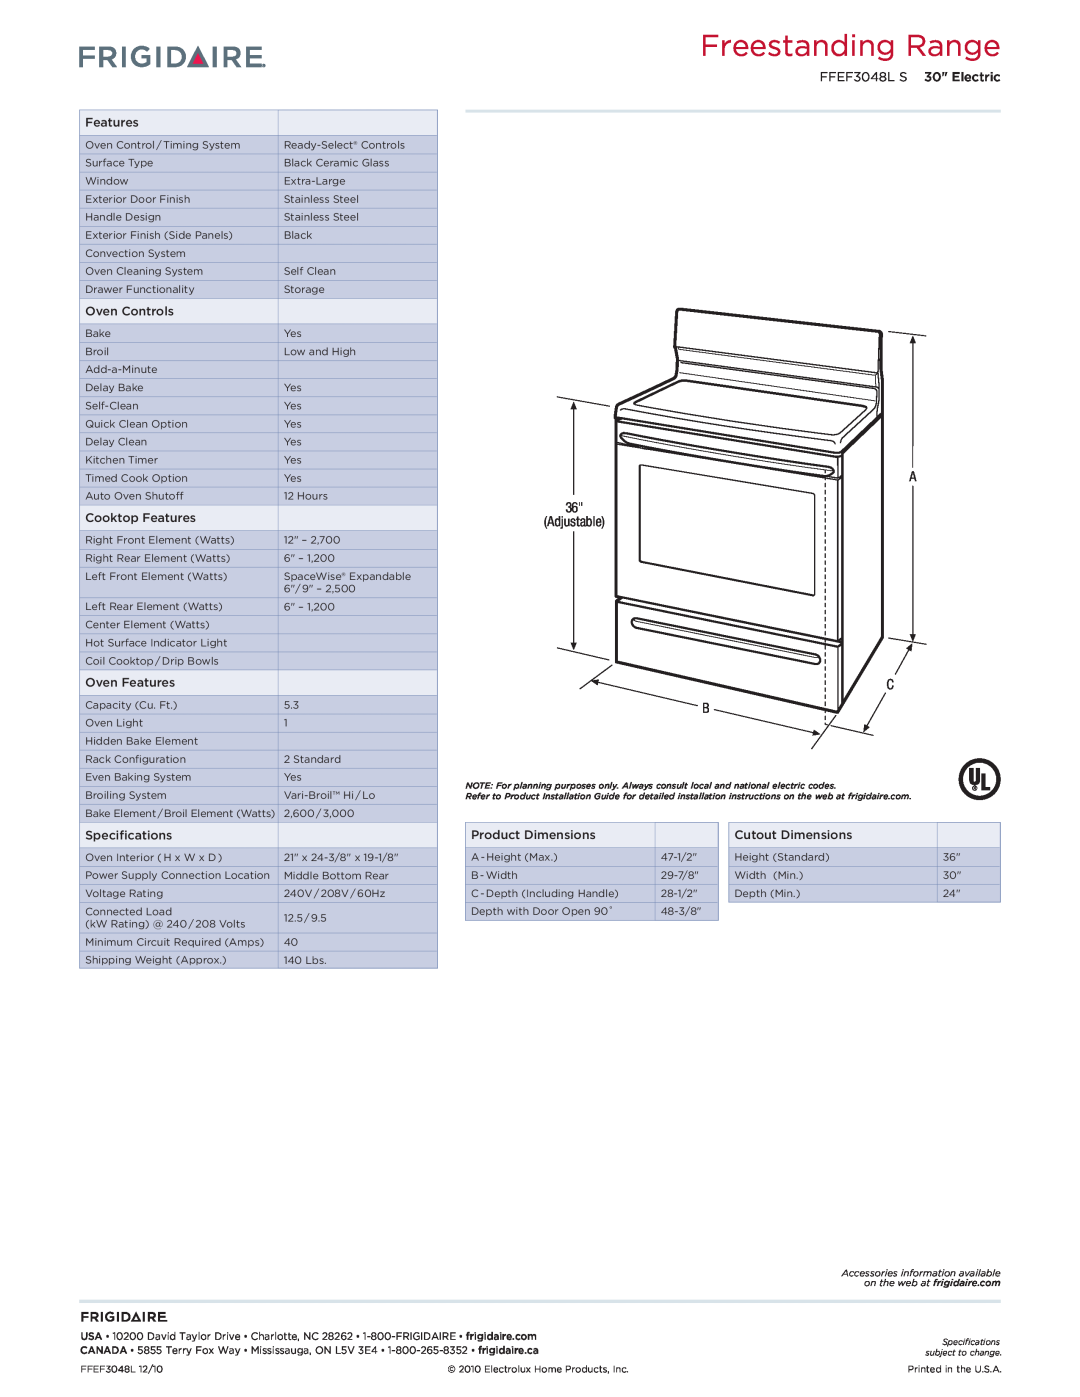 Frigidaire dimensions Freestanding Range, A 36 Adjustable C B, FFEF3048L S 30 Electric 